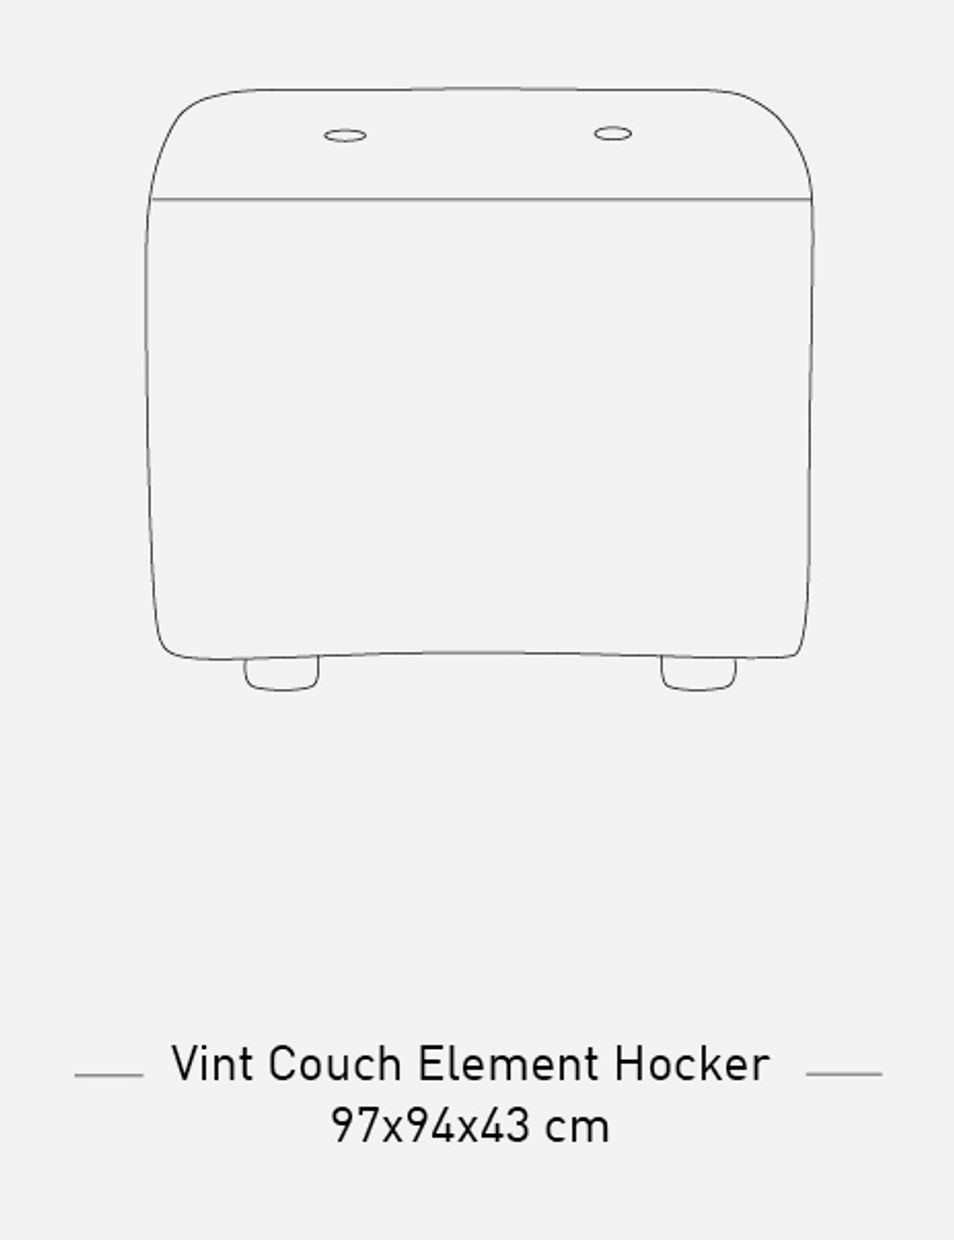 Vint couch: element hocker small, corduroy rib, cream